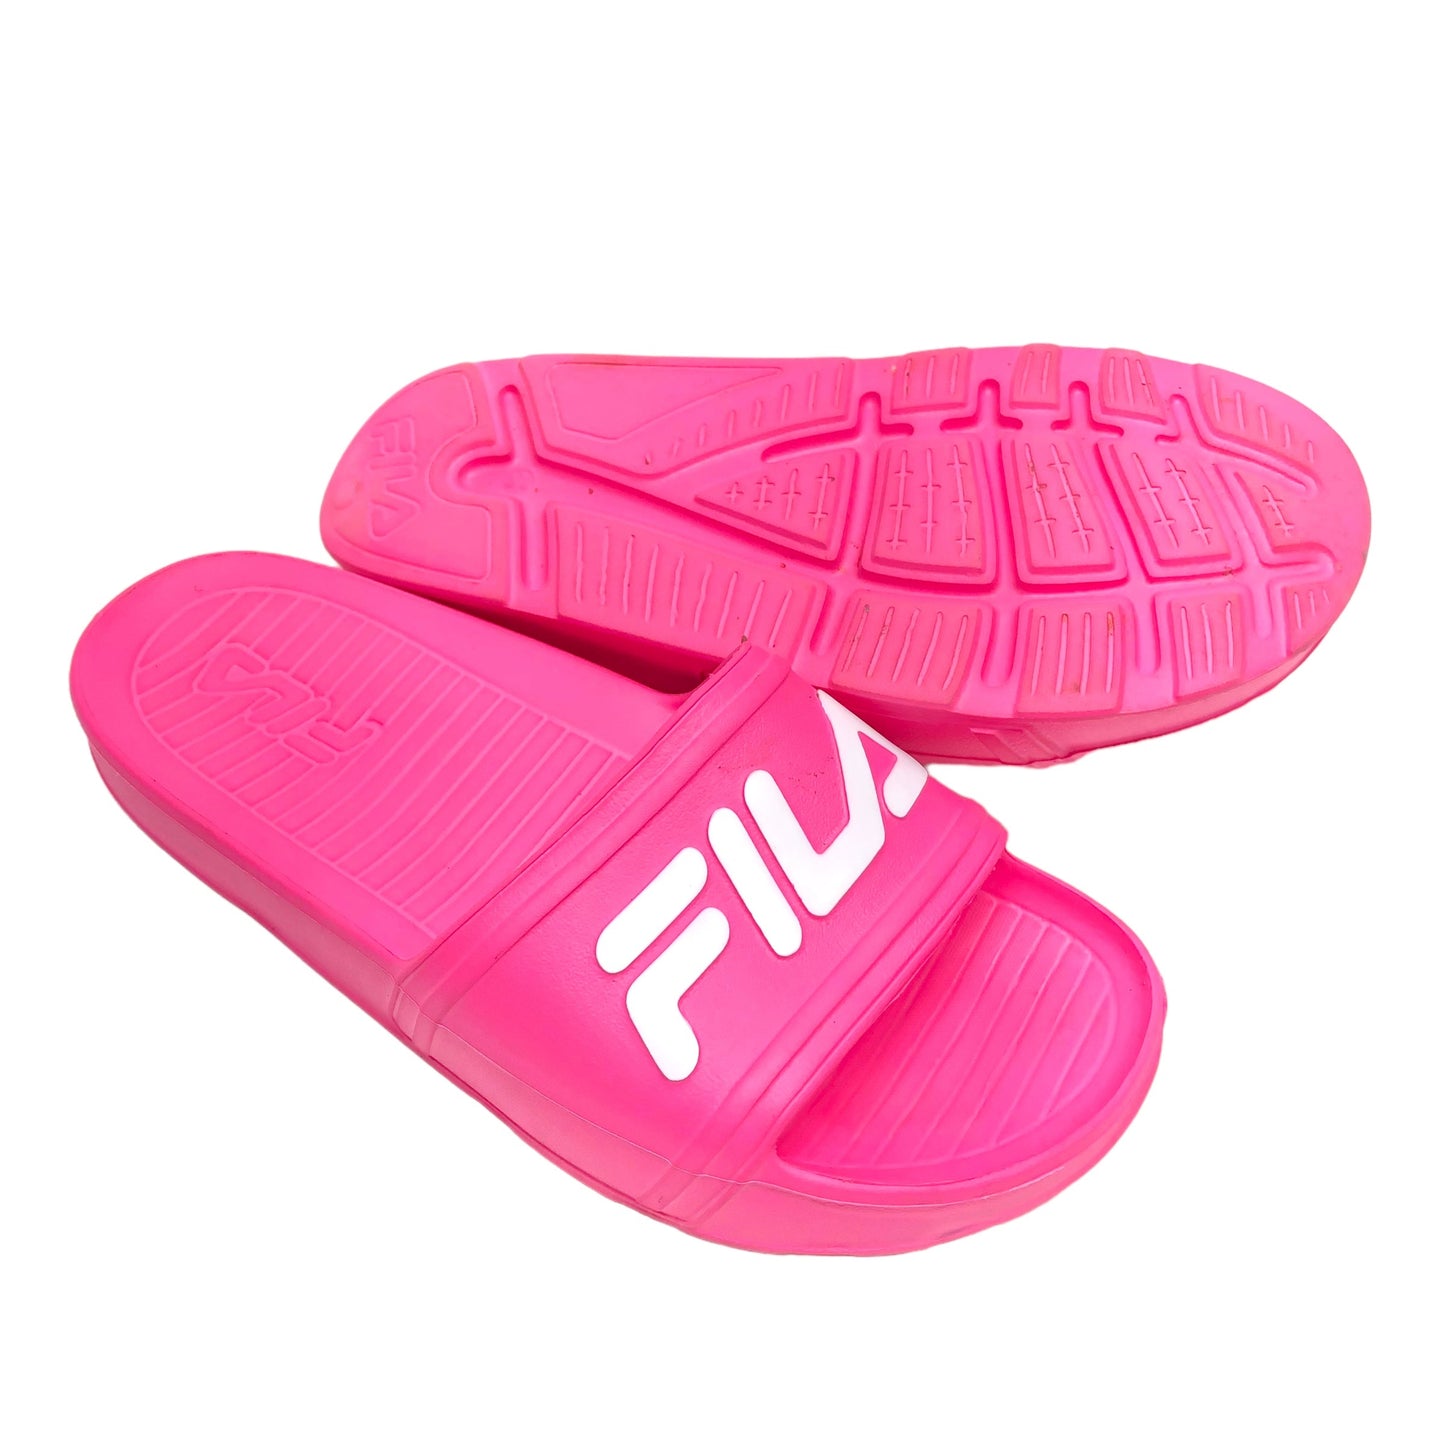 Sandals Sport By Fila  Size: 9